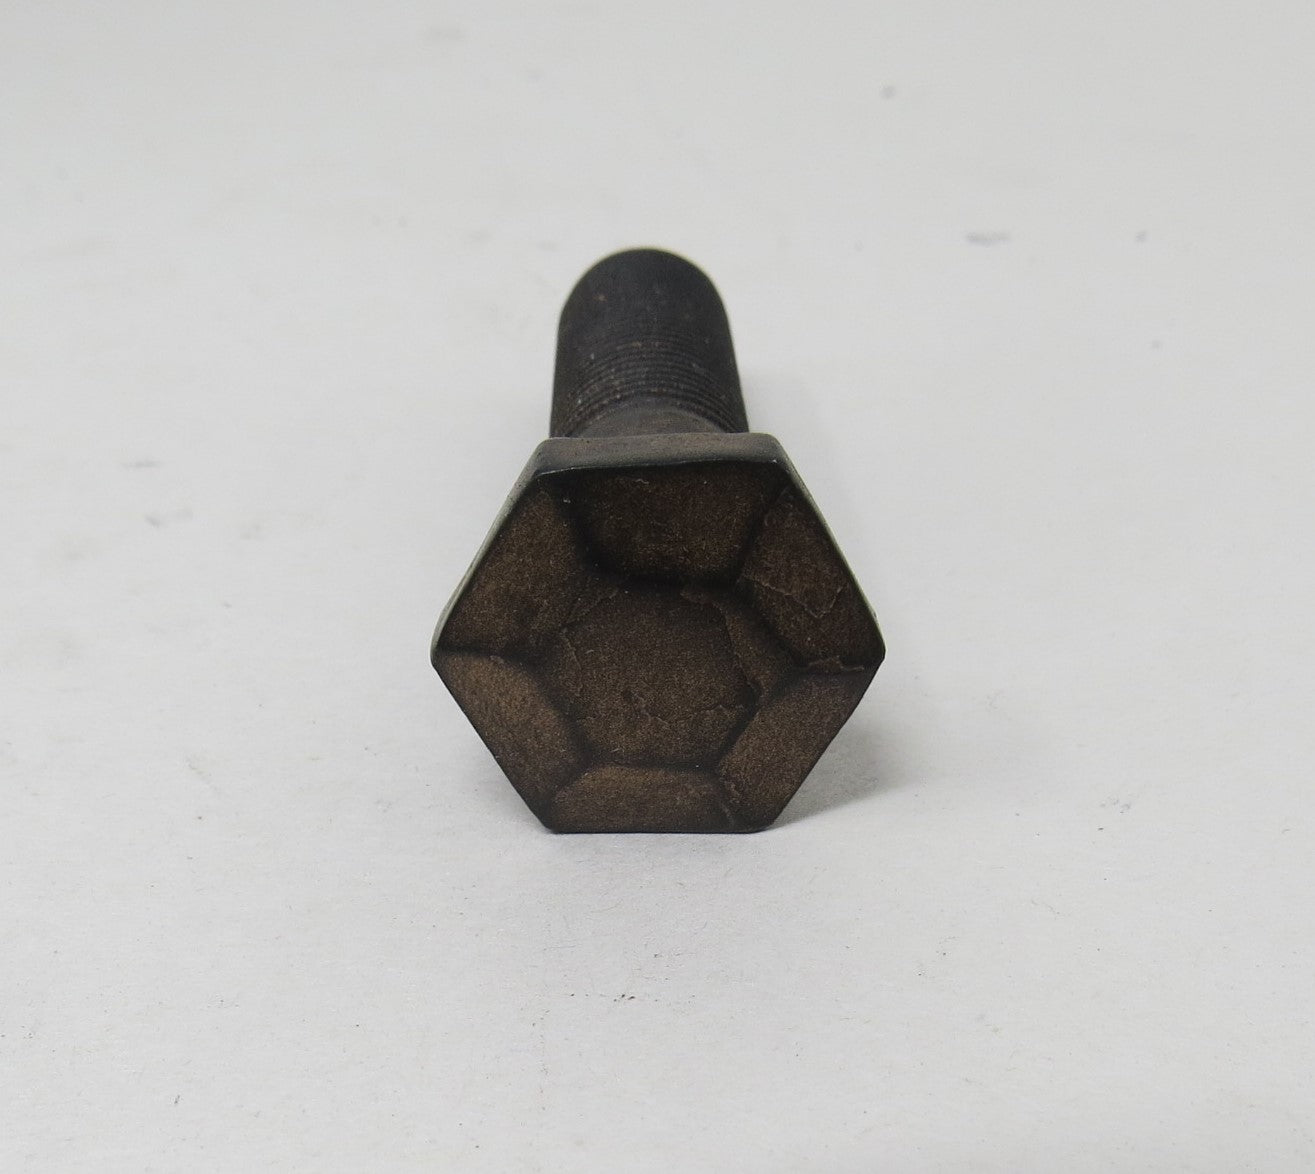 Perno de cabeza hexagonal piramidal de 3/8" de diámetro